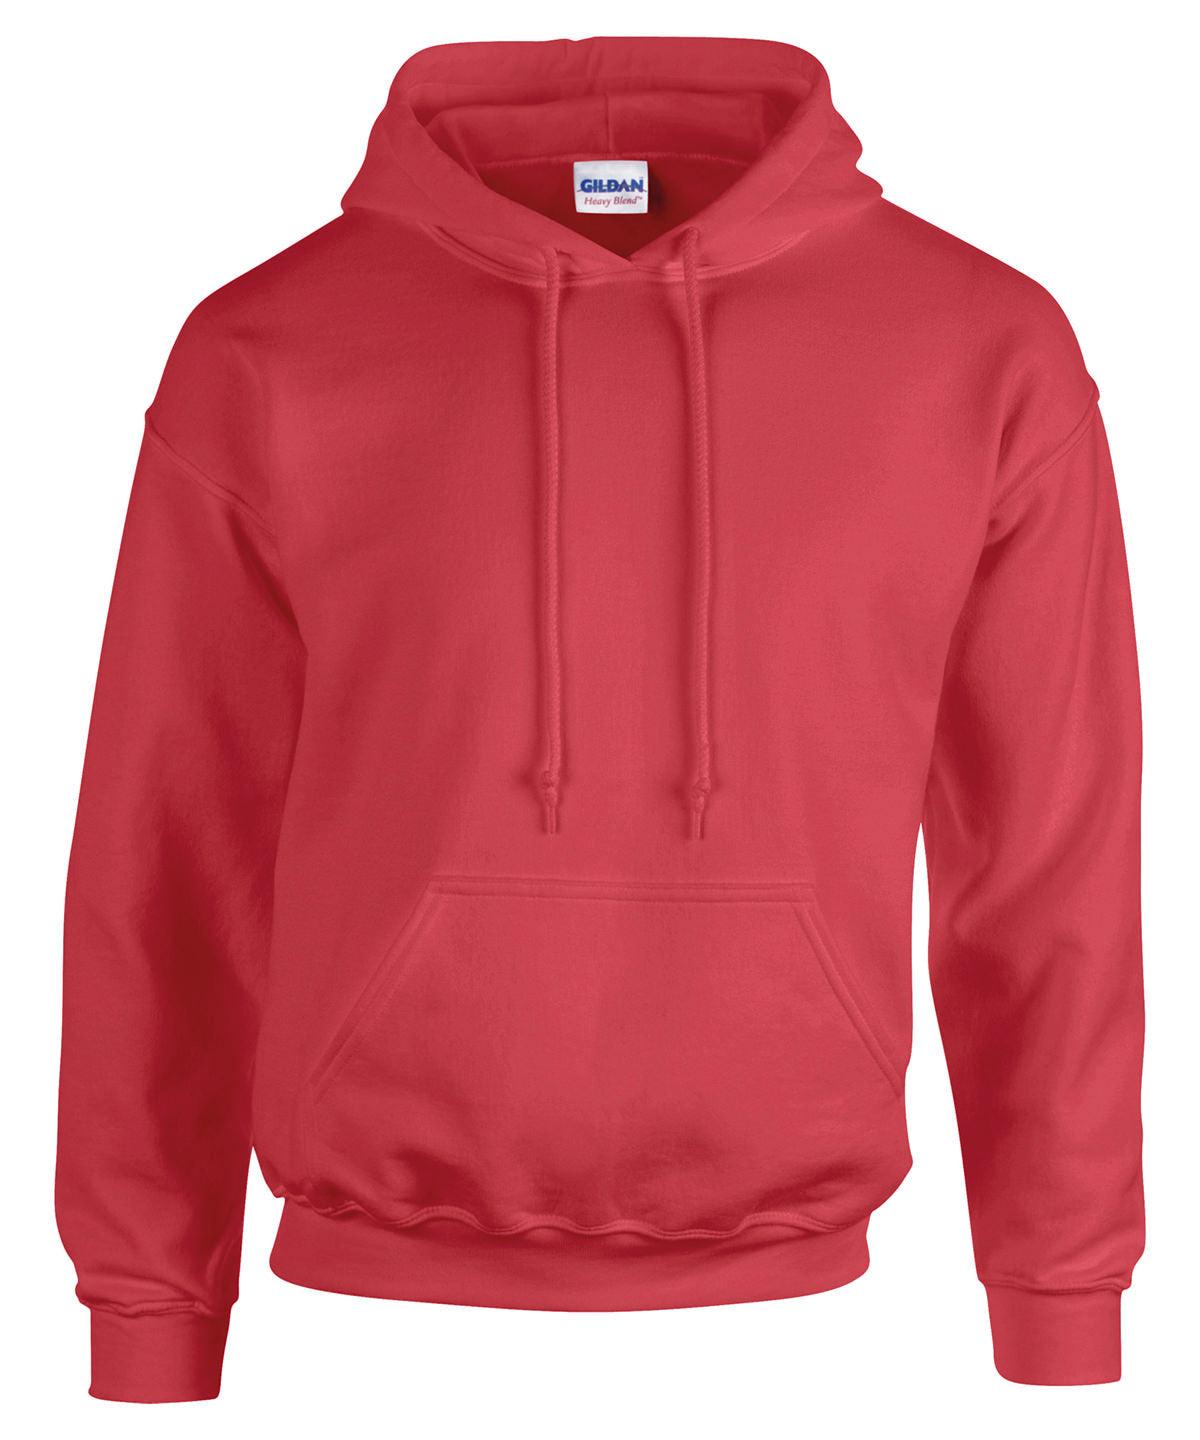 Gildan Heavy Blend Hooded sweatshirt Antique Cherry Red